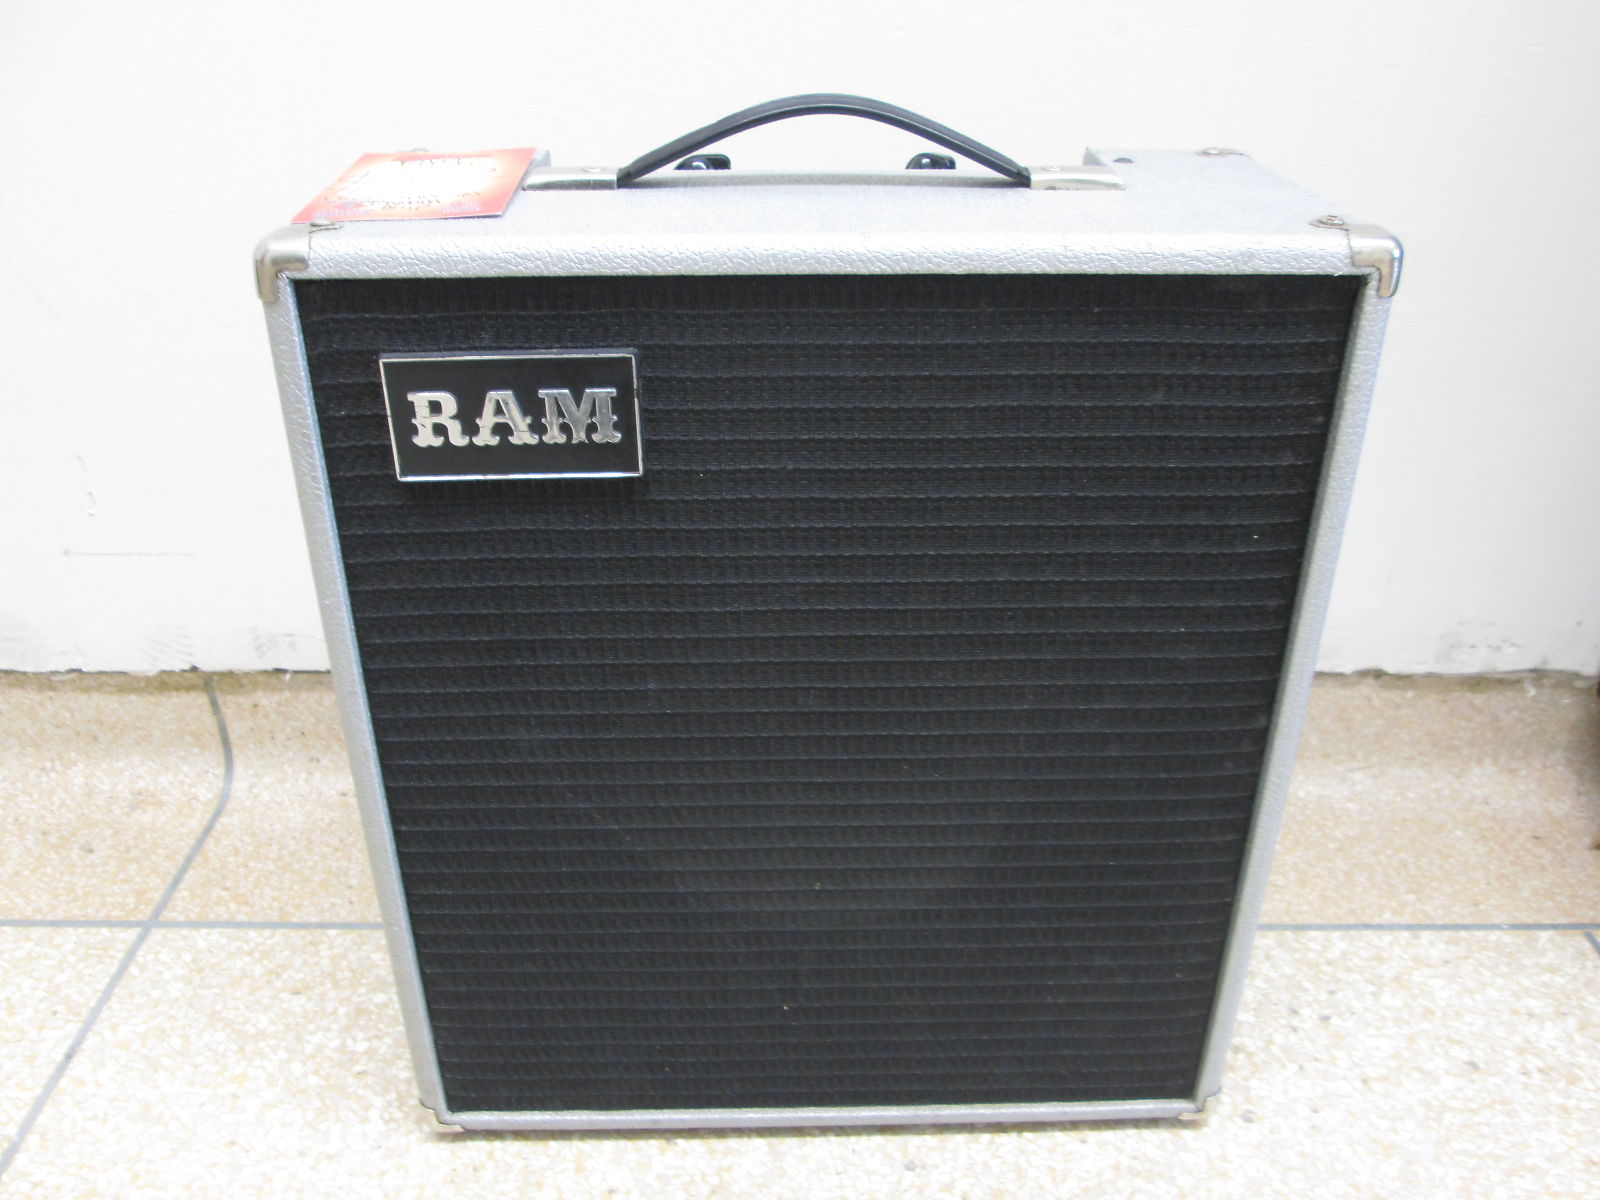 Ram Guitar Amplifier Made In Canada by Garnet. Used